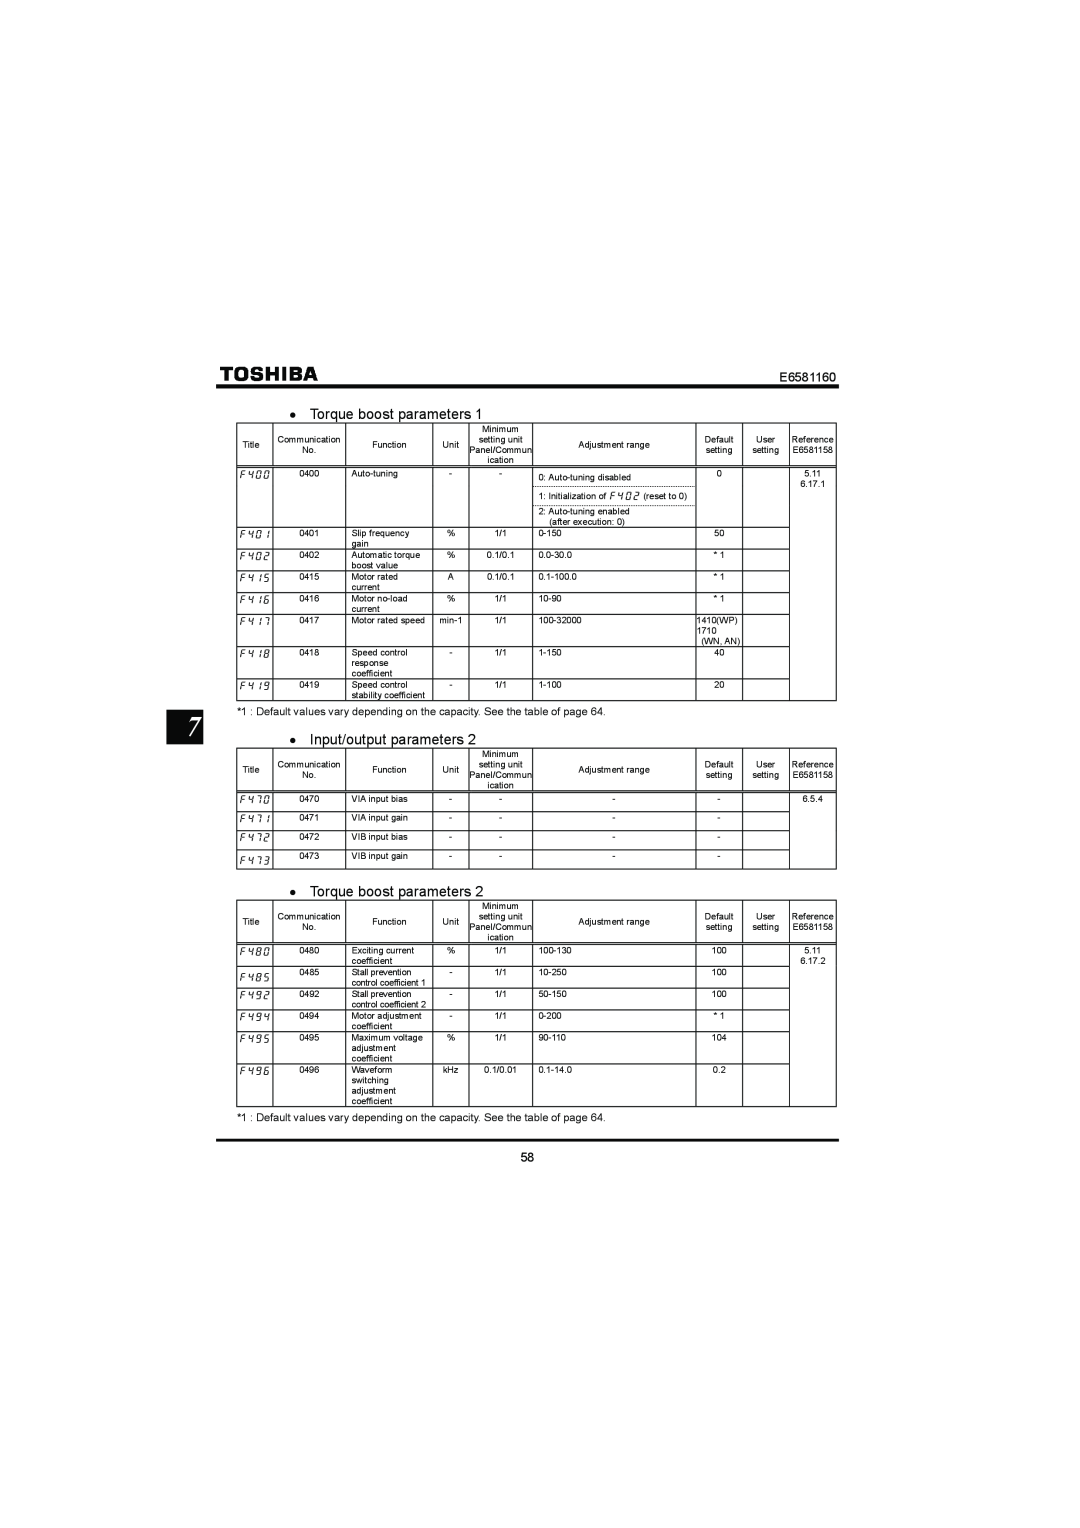 Toshiba VF-S11 manual Torque boost parameters, Input/output parameters, E6581160 